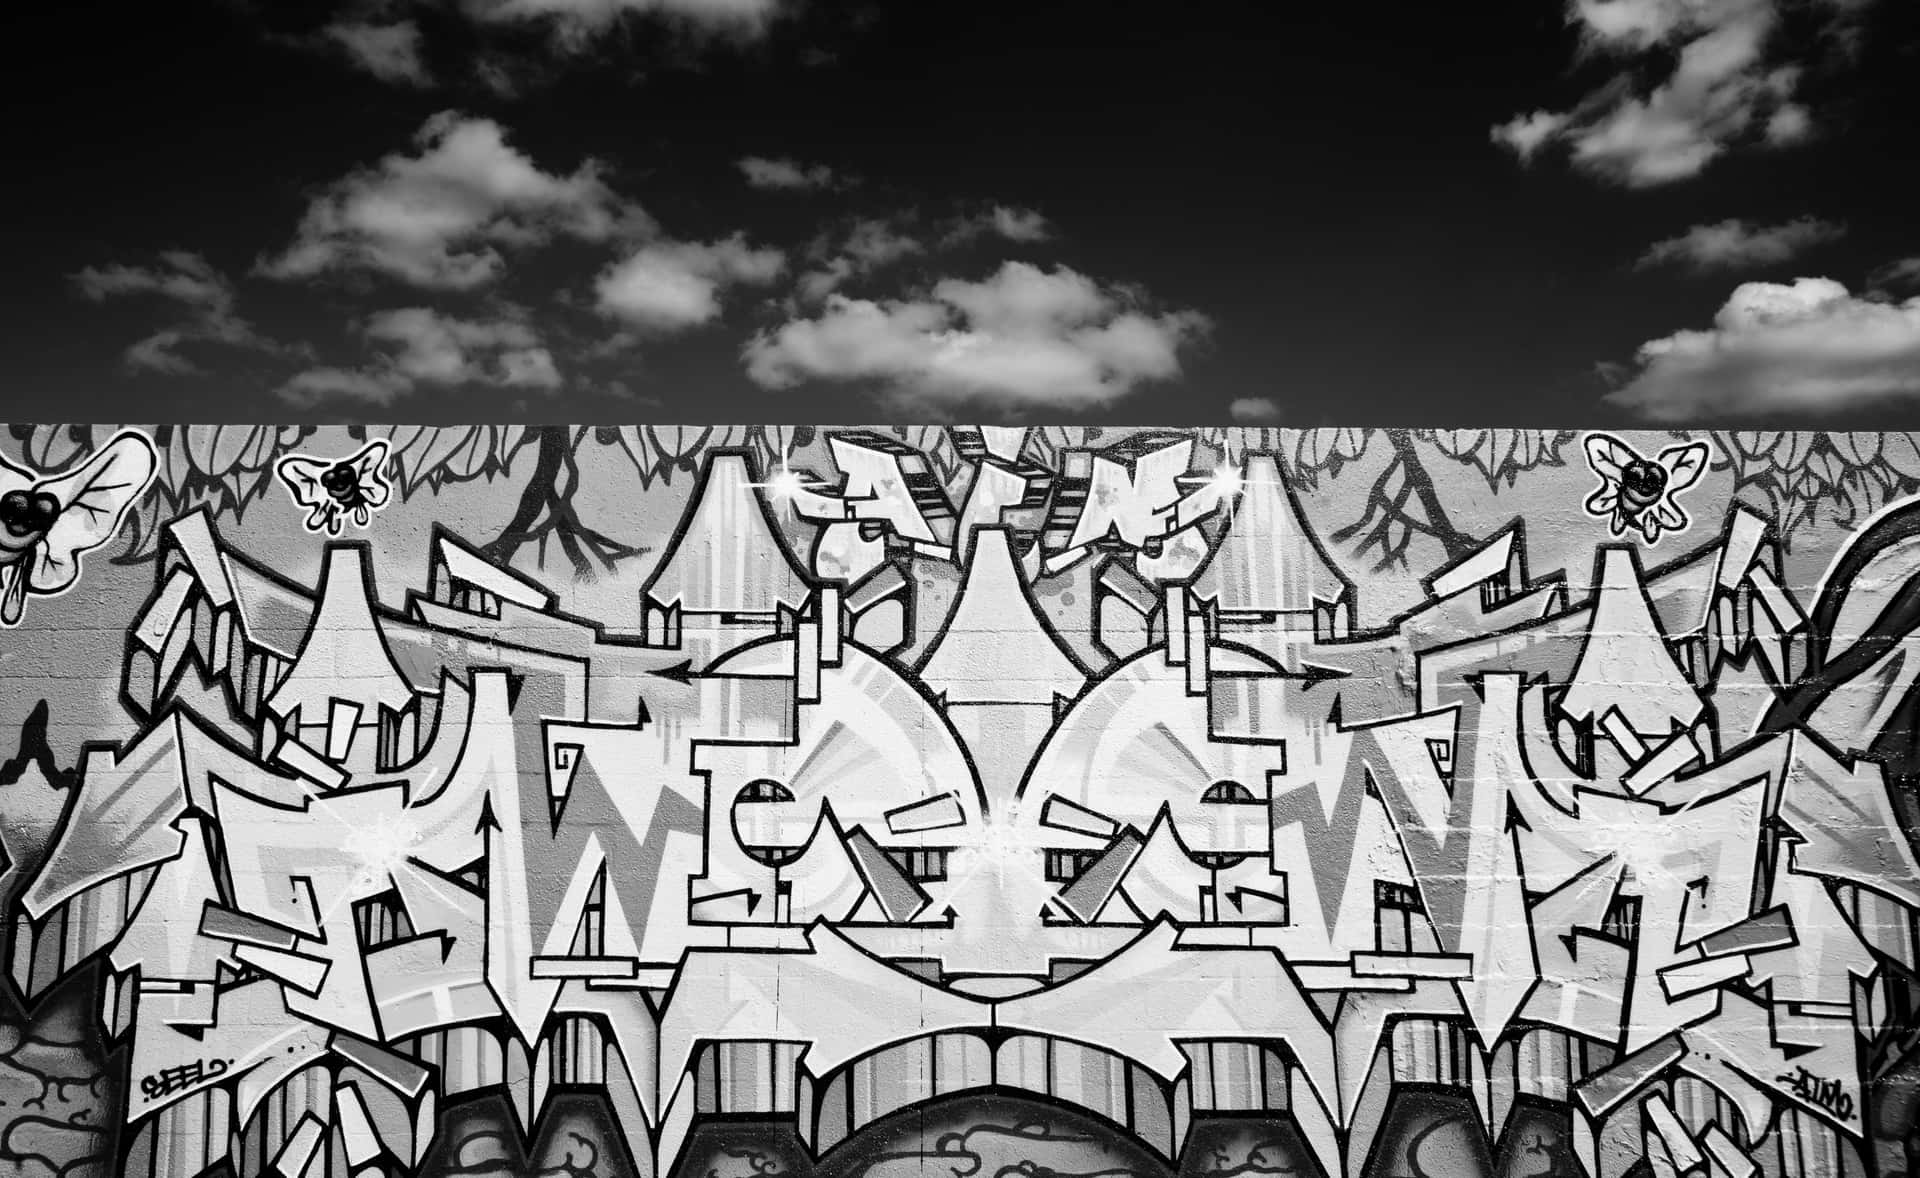 Striking Black and White Graffiti Art on Urban Walls Wallpaper